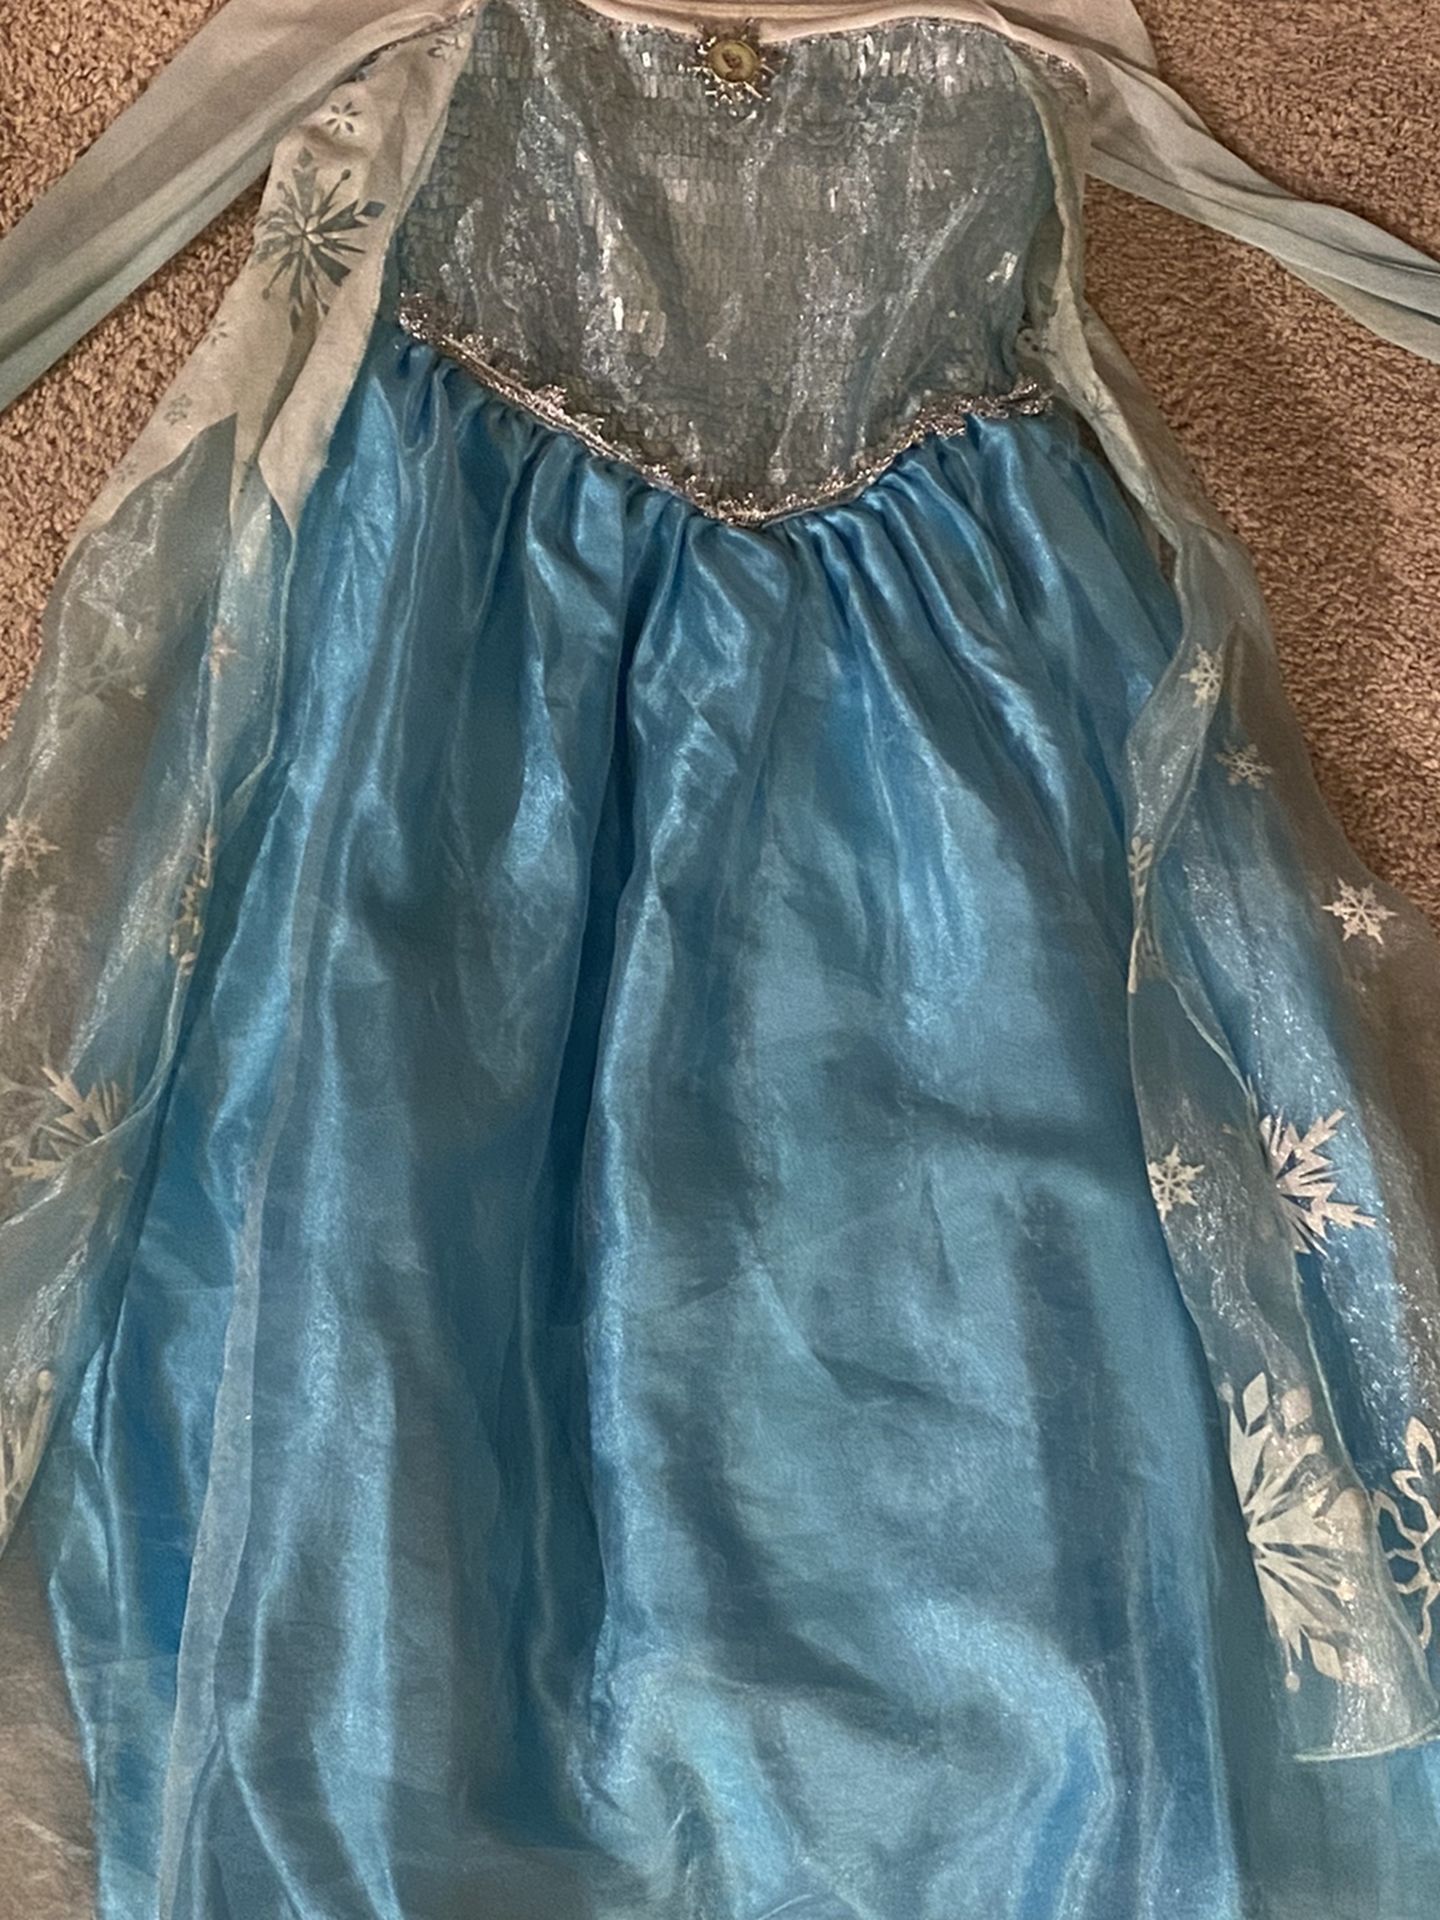 DISNEY Store Elsa Costume Size 7/8